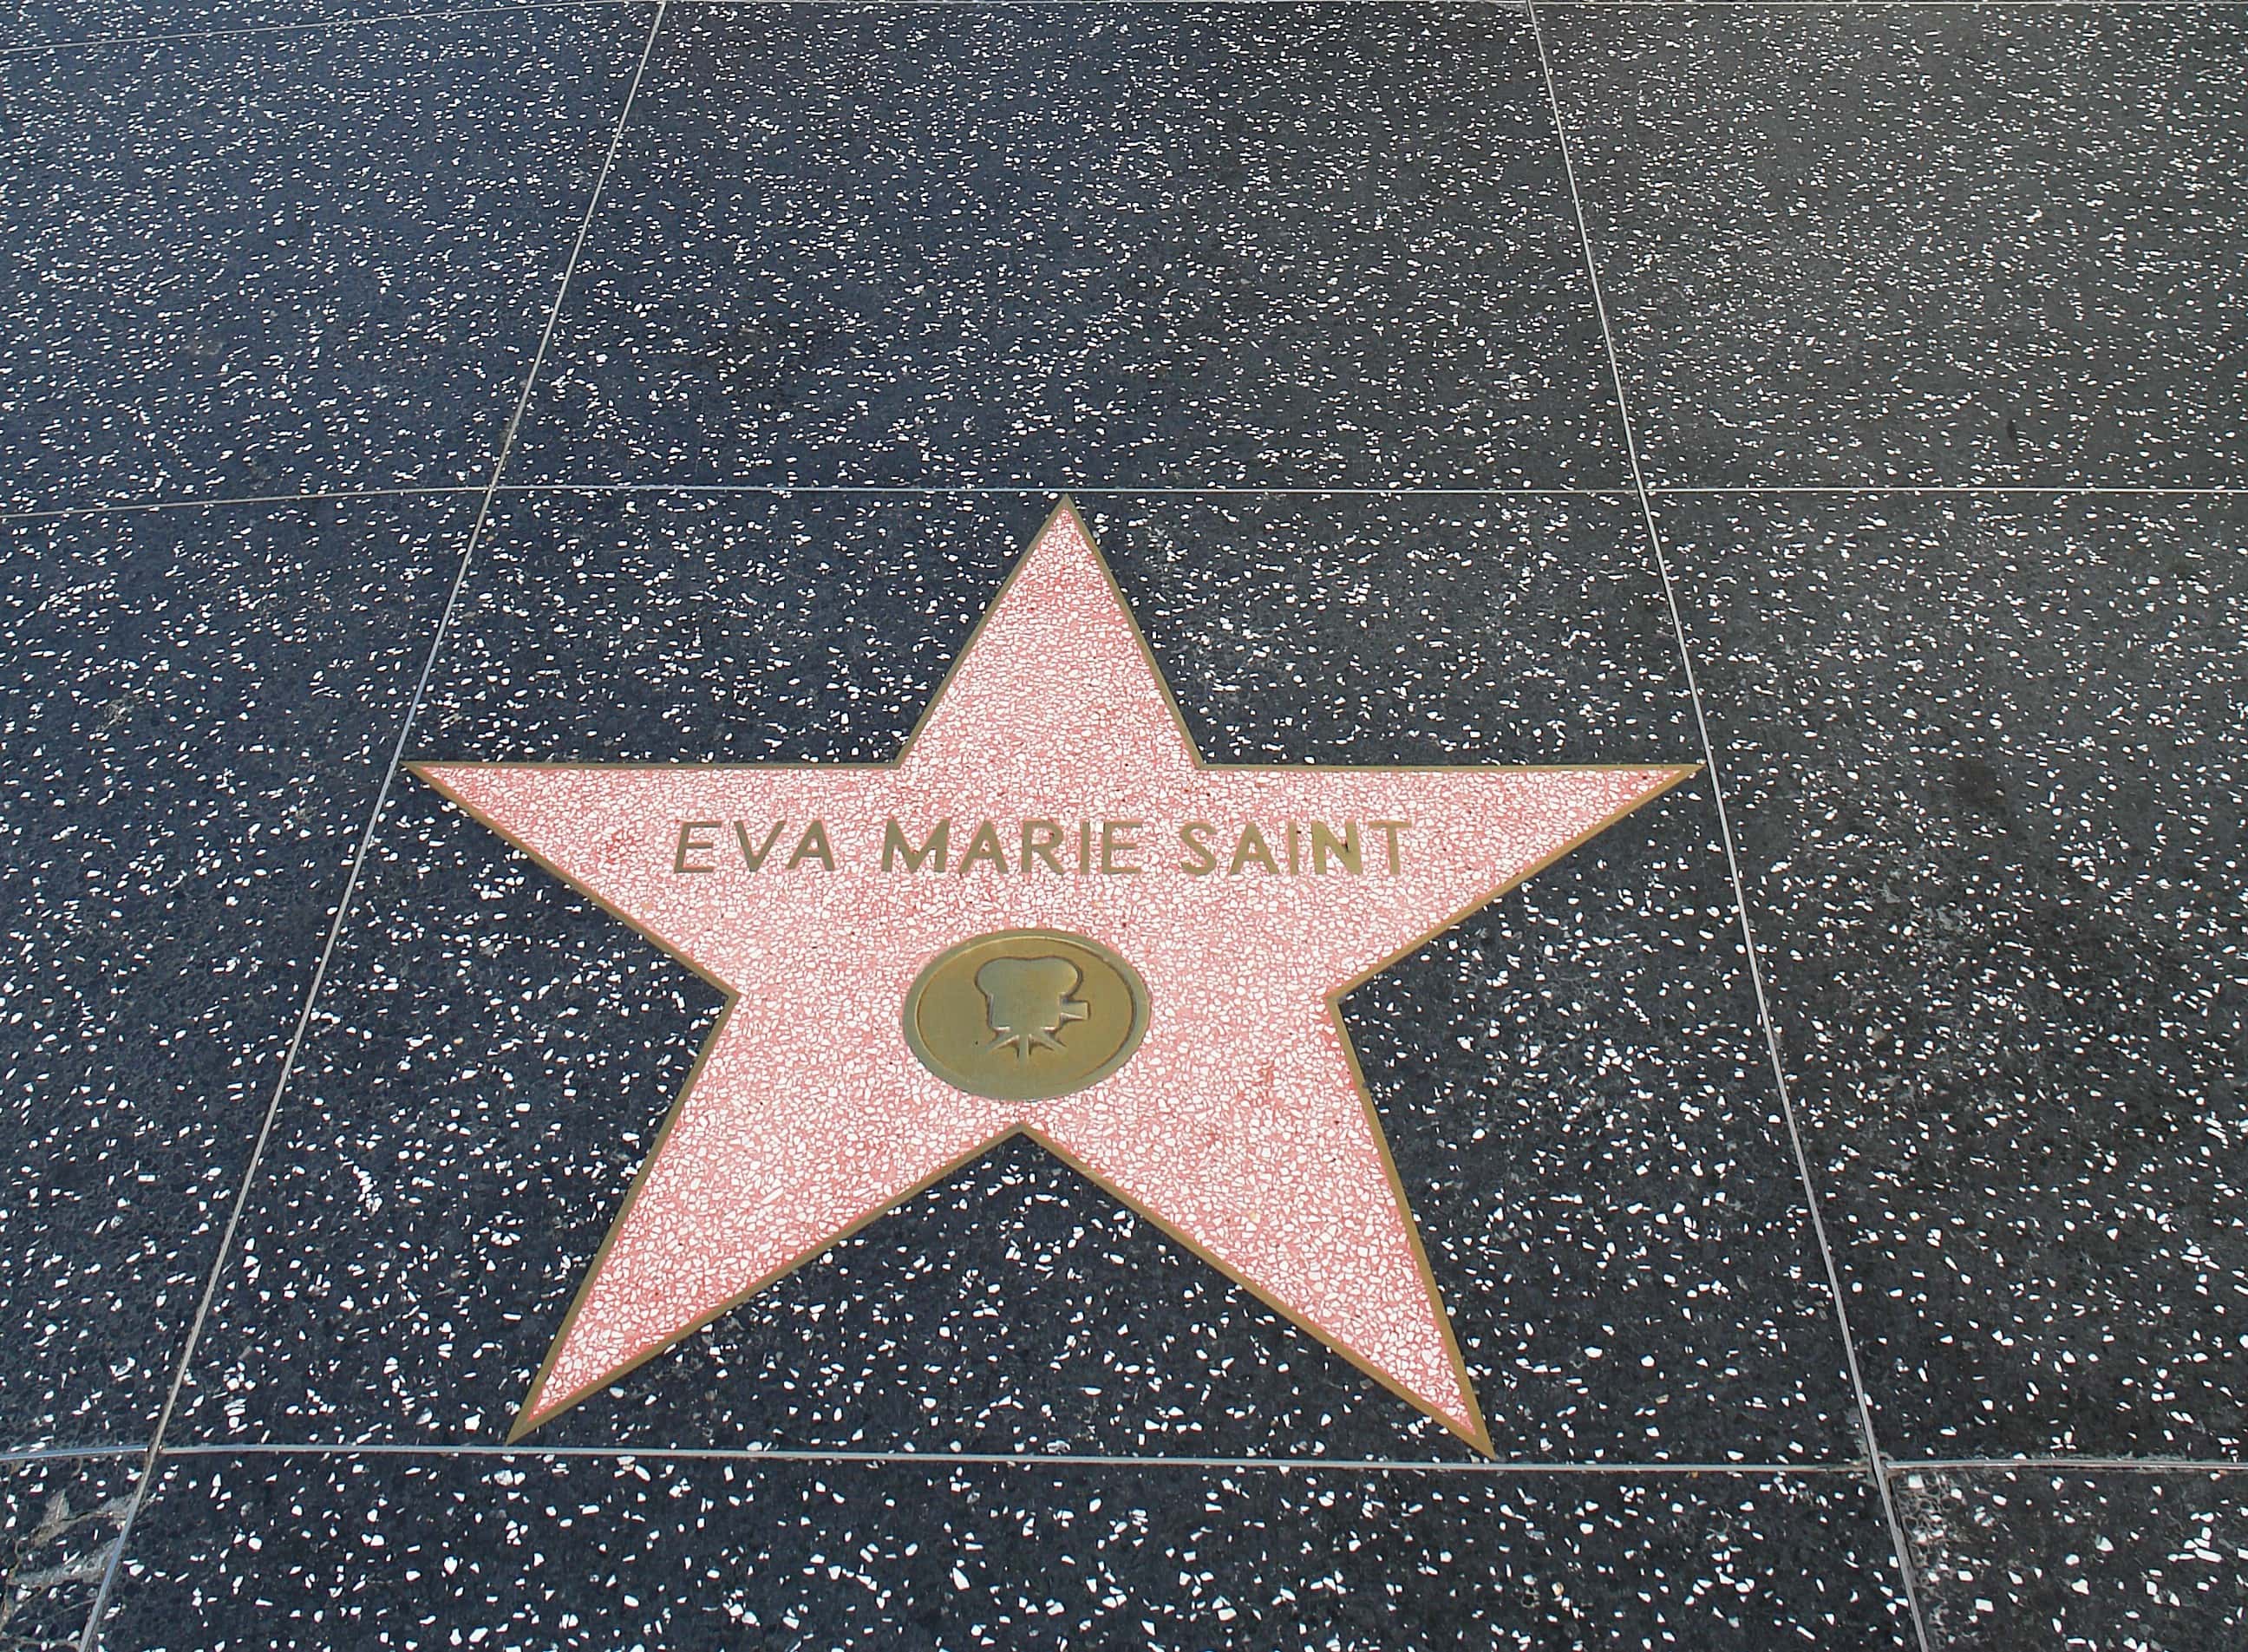 Eva Marie Saint Facts